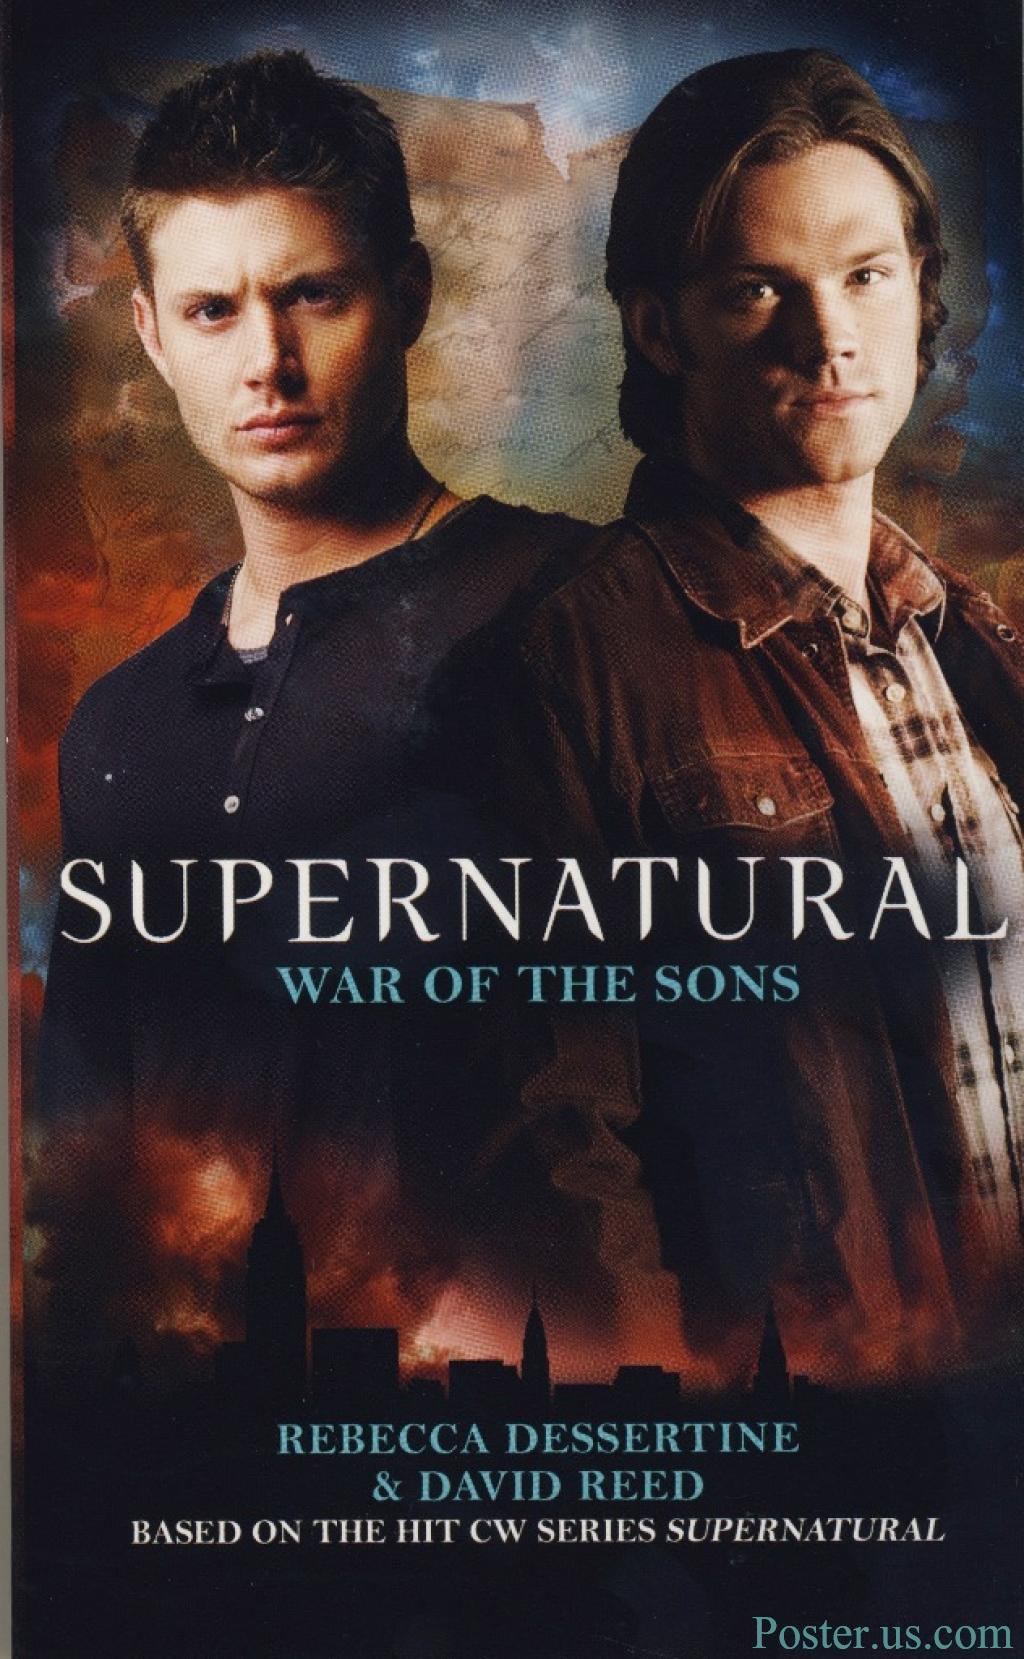 Supernatural Posters - Supernatural Photo (30777889) - Fanpop